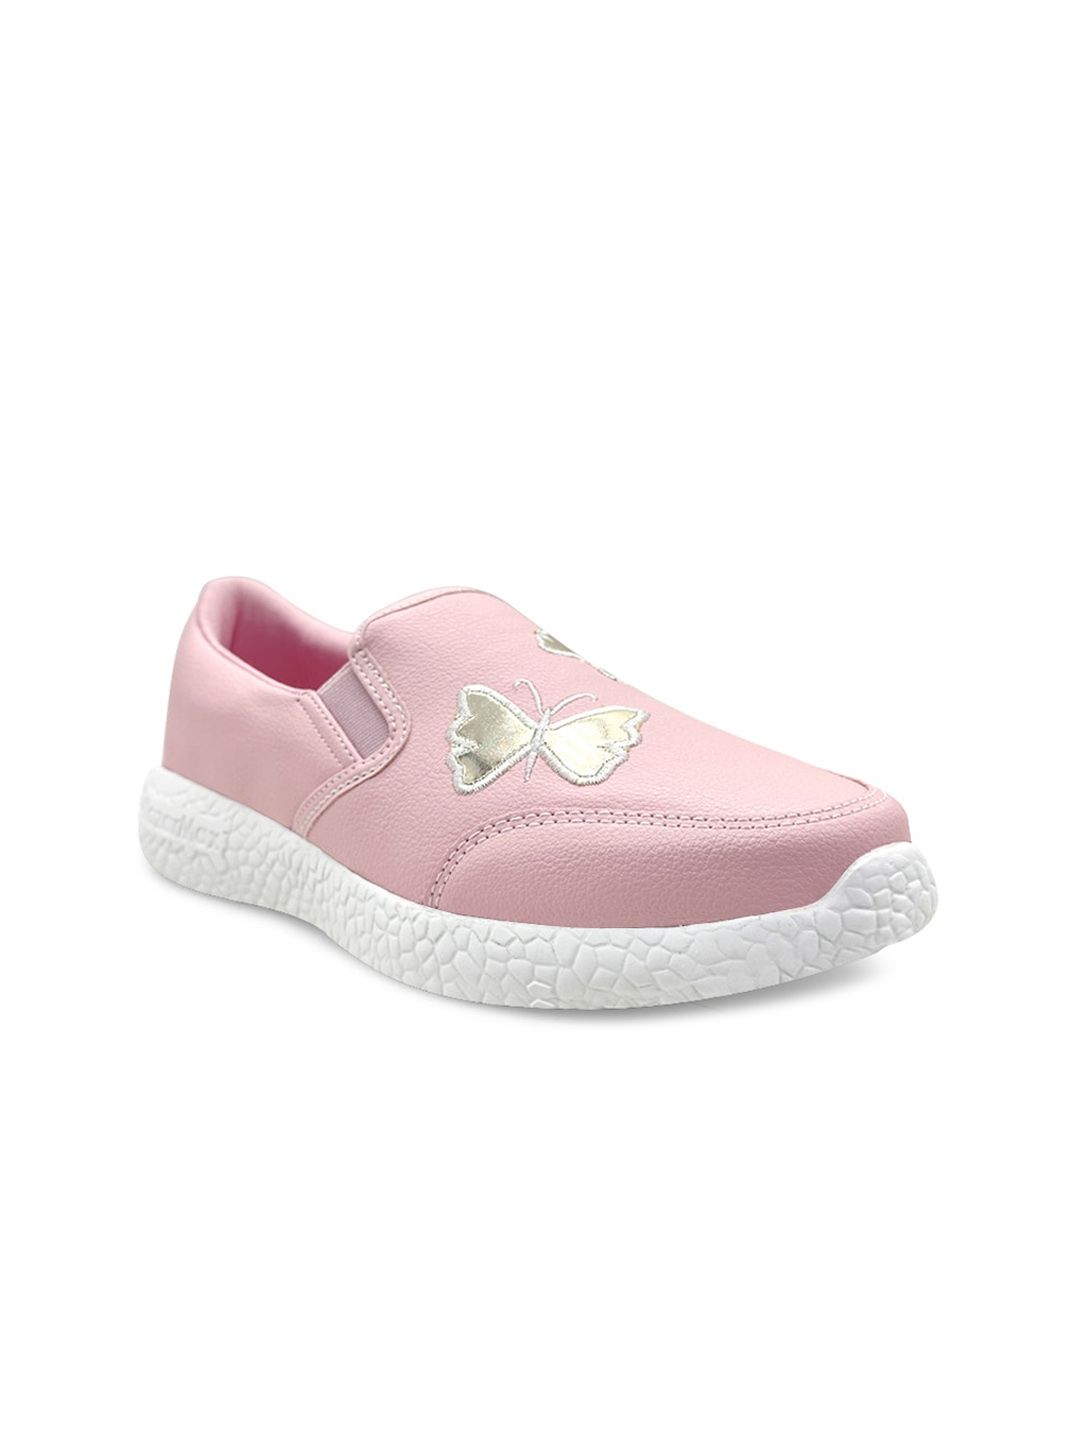 KazarMax Women Pink Textured PU Slip-On Sneakers Price in India